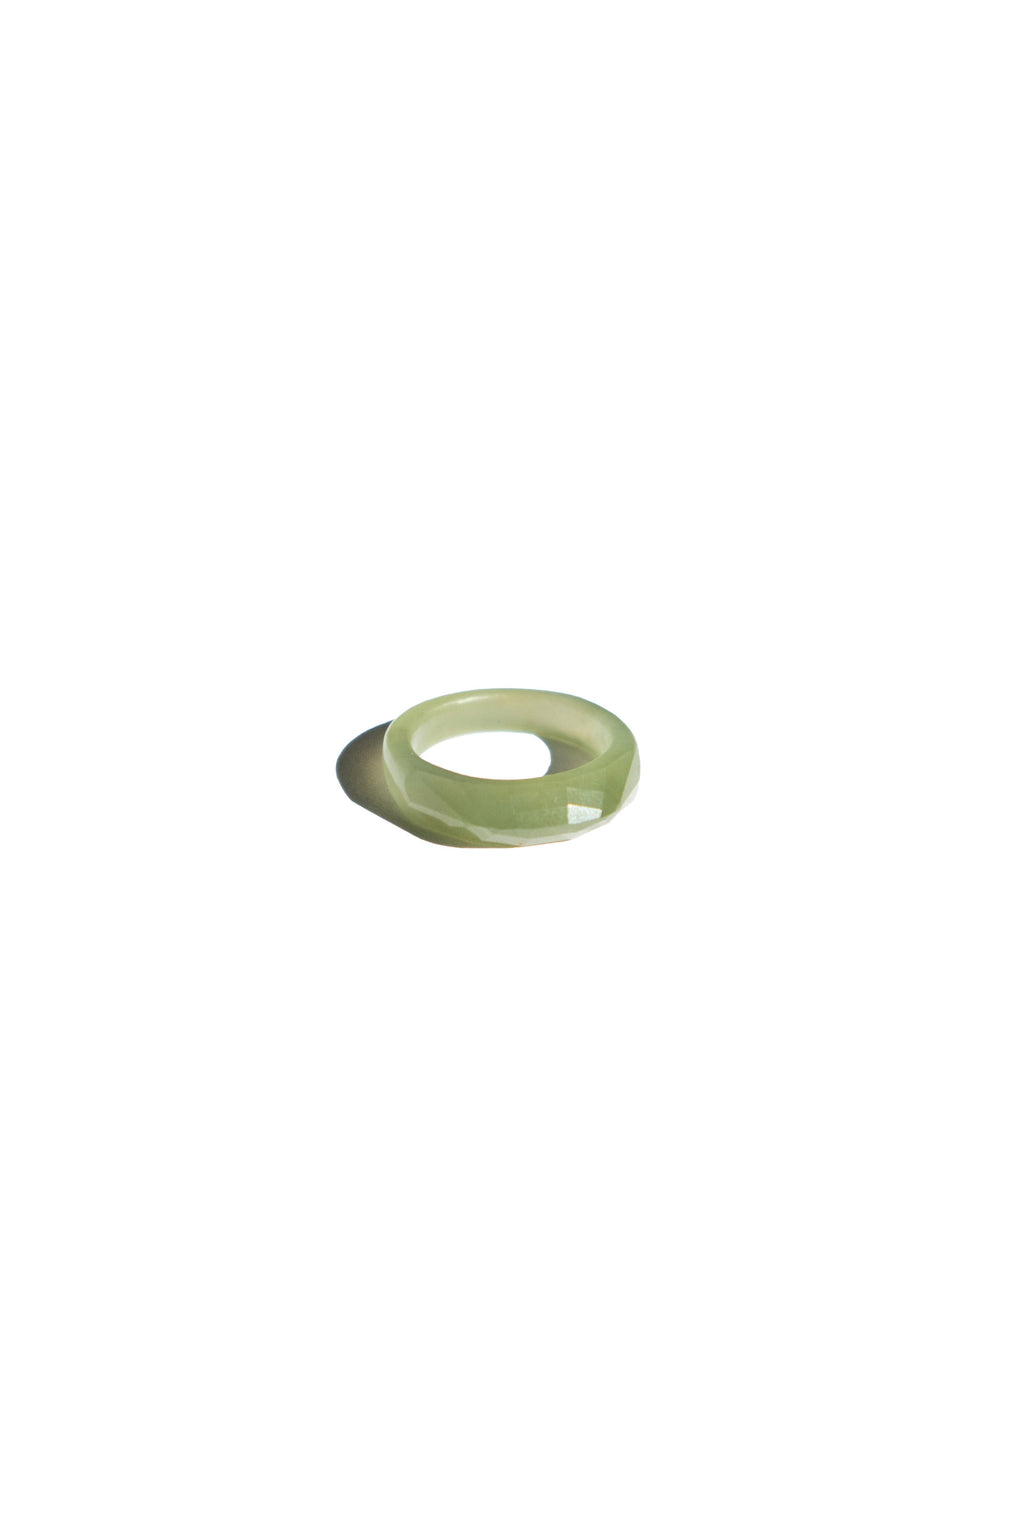 seree-dia-ring-diamond-shape-structured-nephrite-green-jade-ring